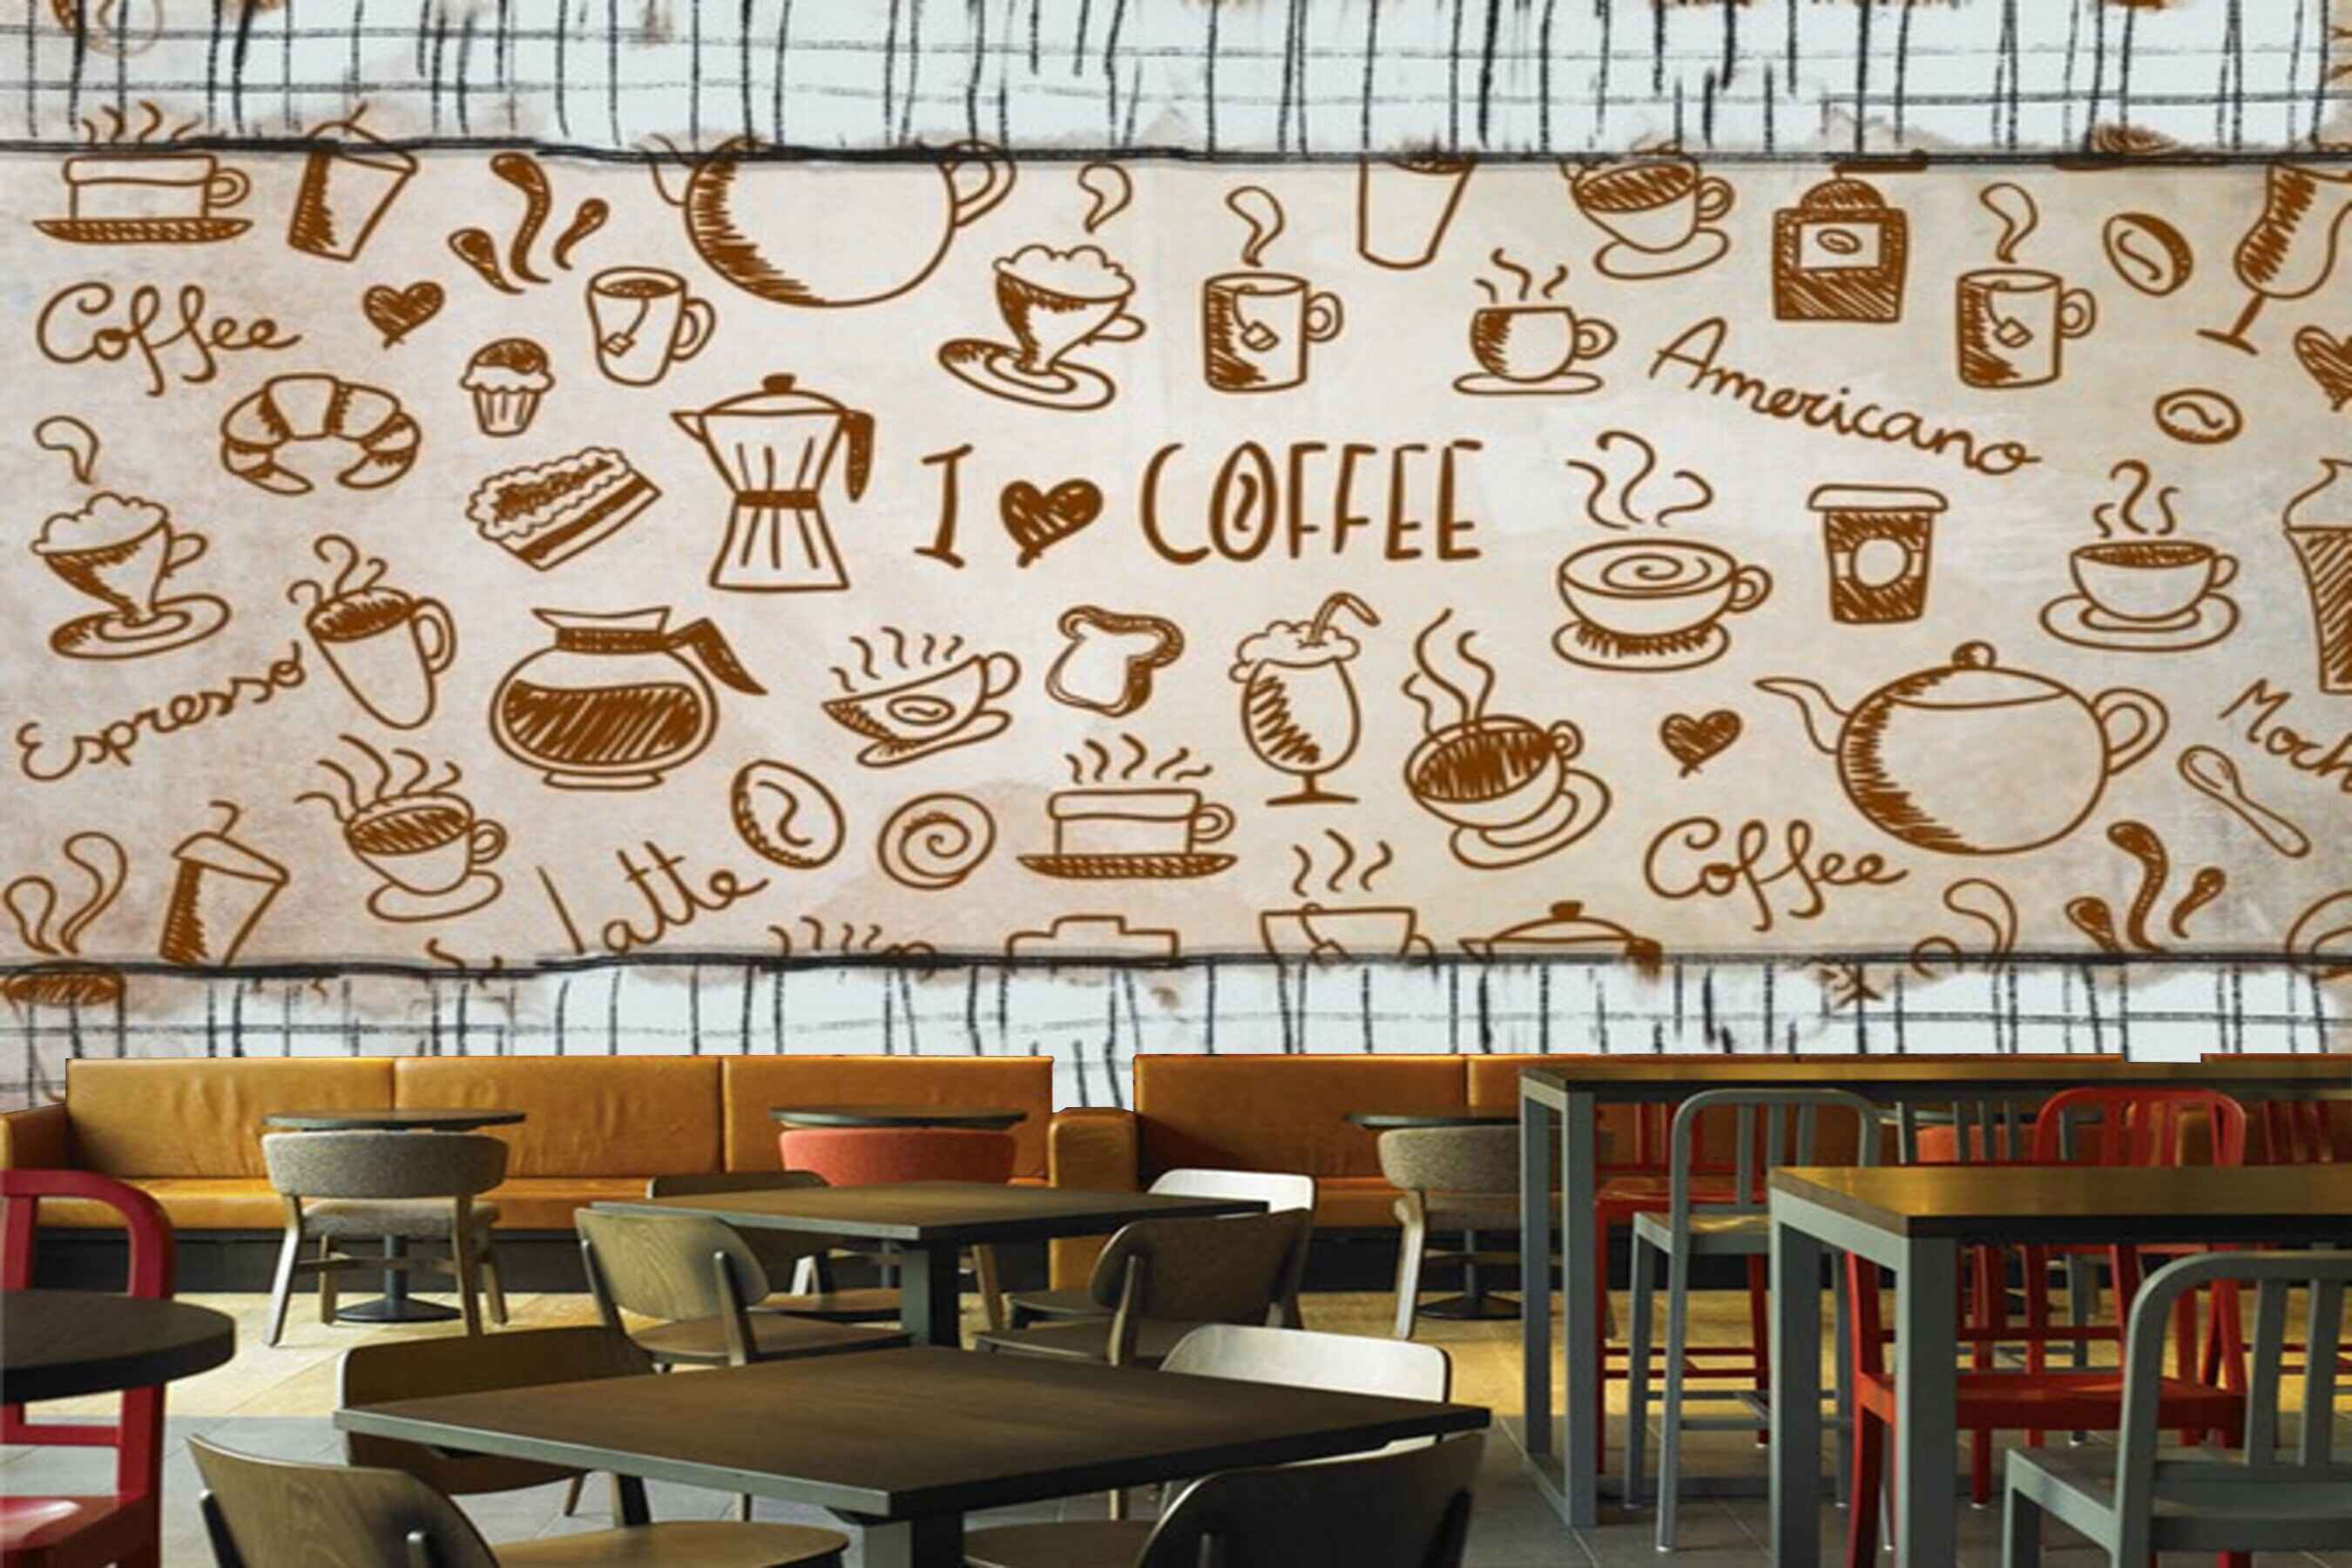 Avikalp MWZ3070 Coffee Americano Espresso Lattee Mocha HD Wallpaper for Cafe Restaurant